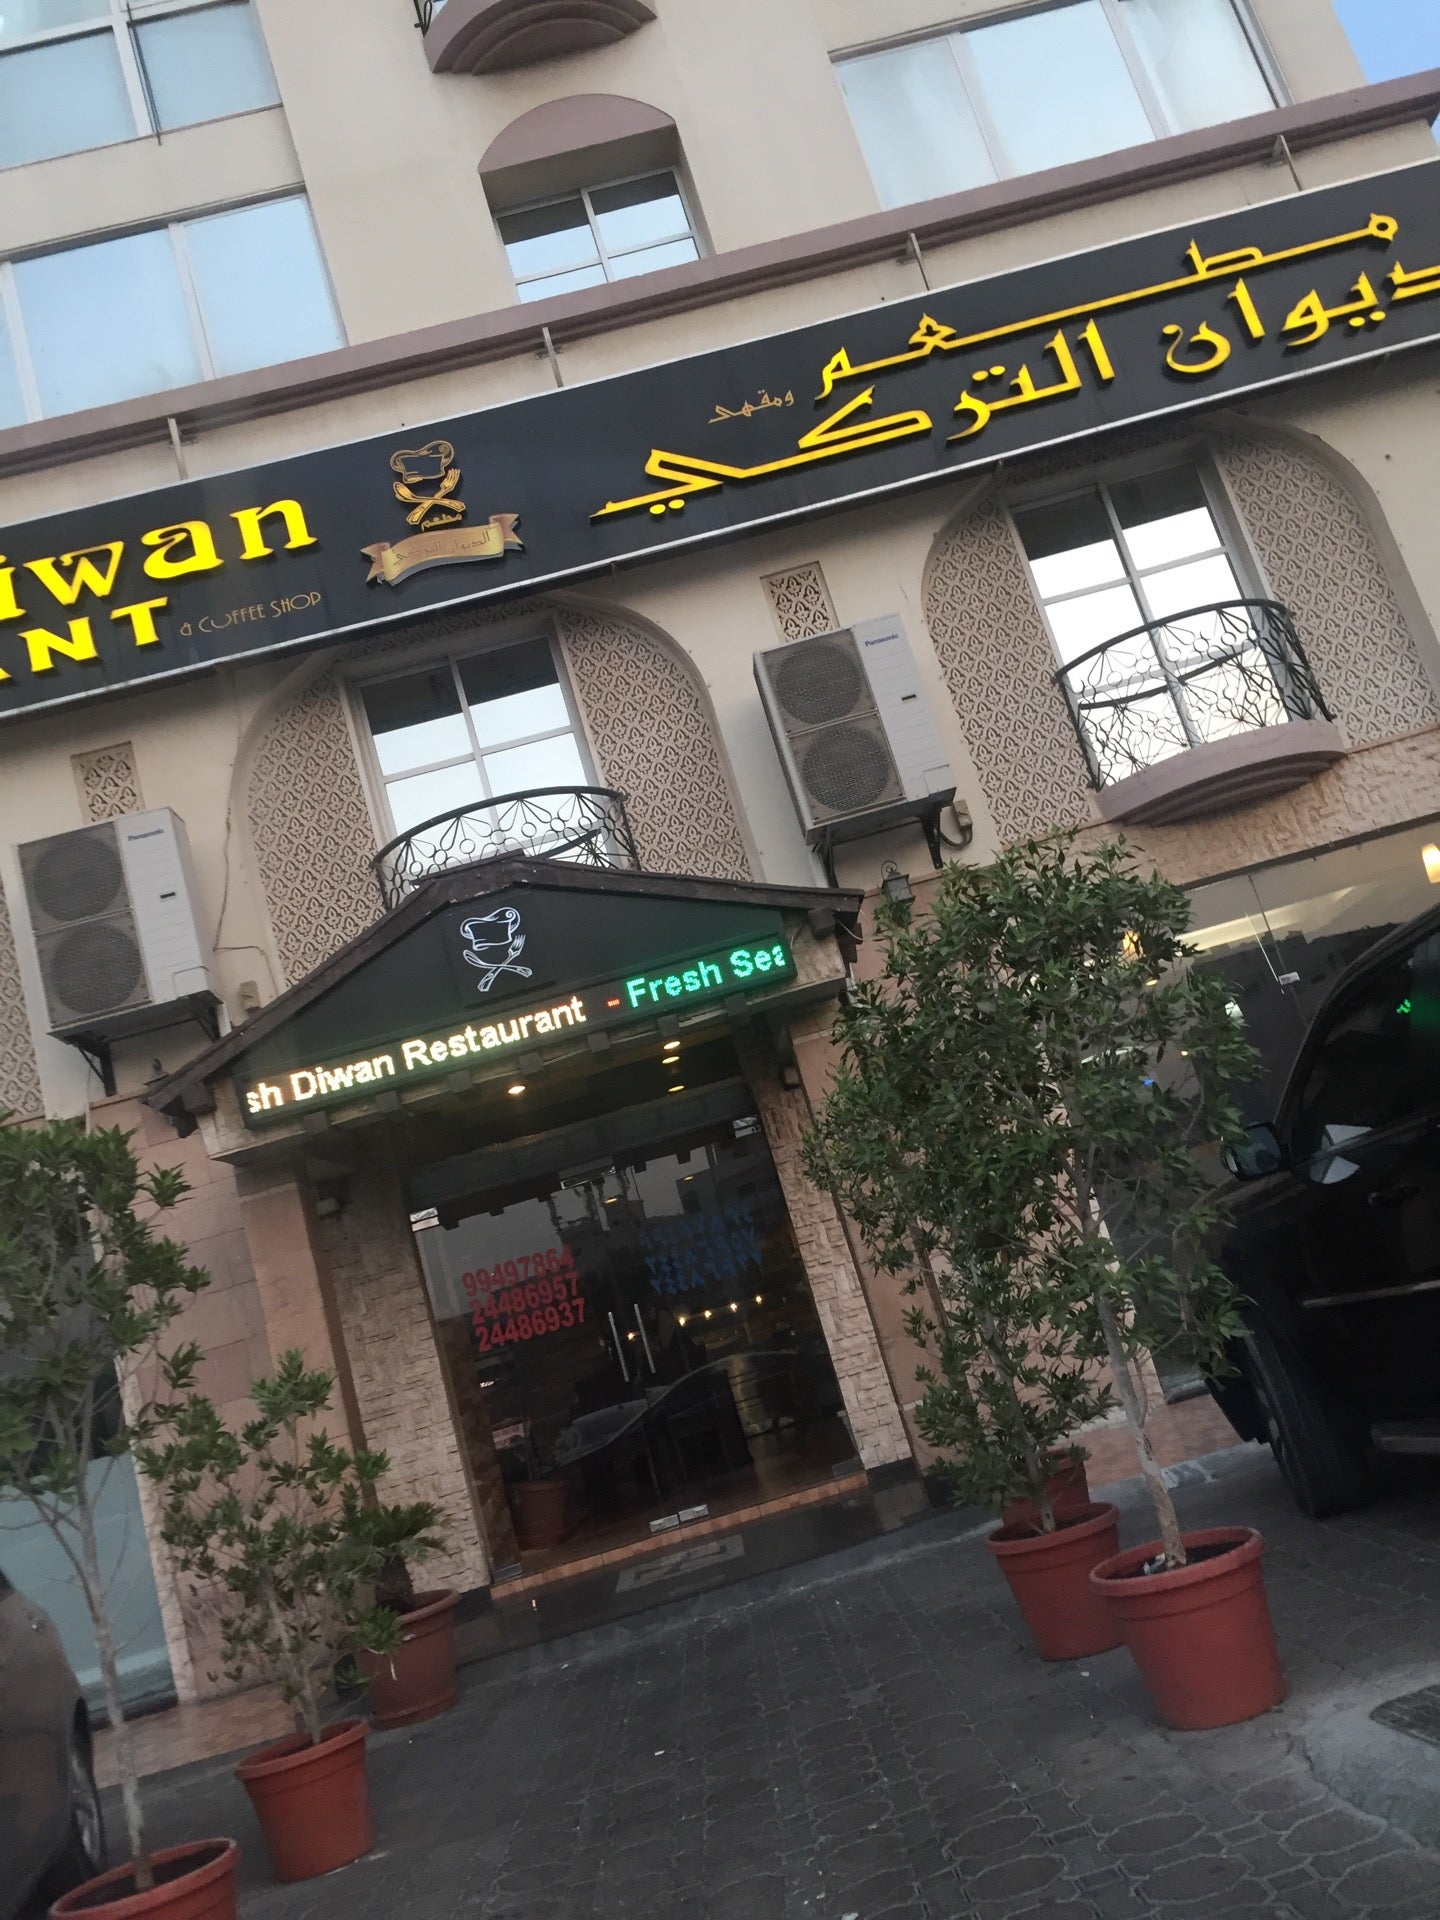 Turkish Diwan Restaurant (مطعم الديوان التركي)